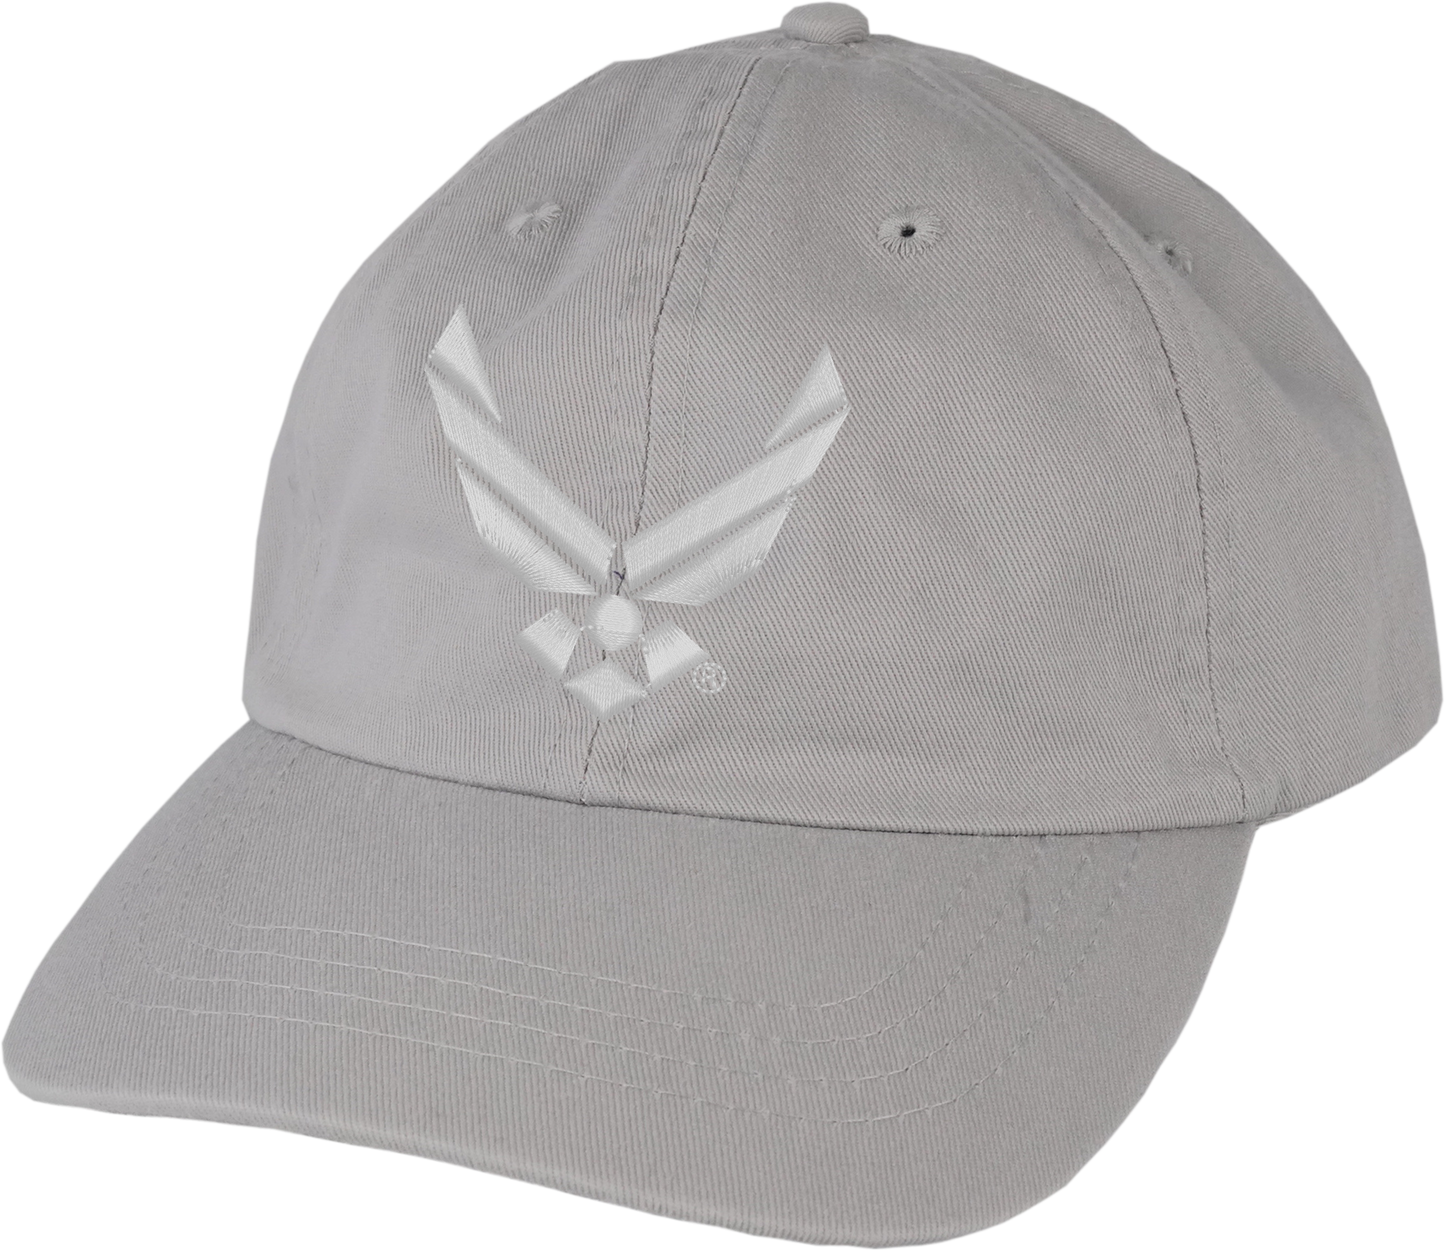 US Air Force Symbol on Ball Cap